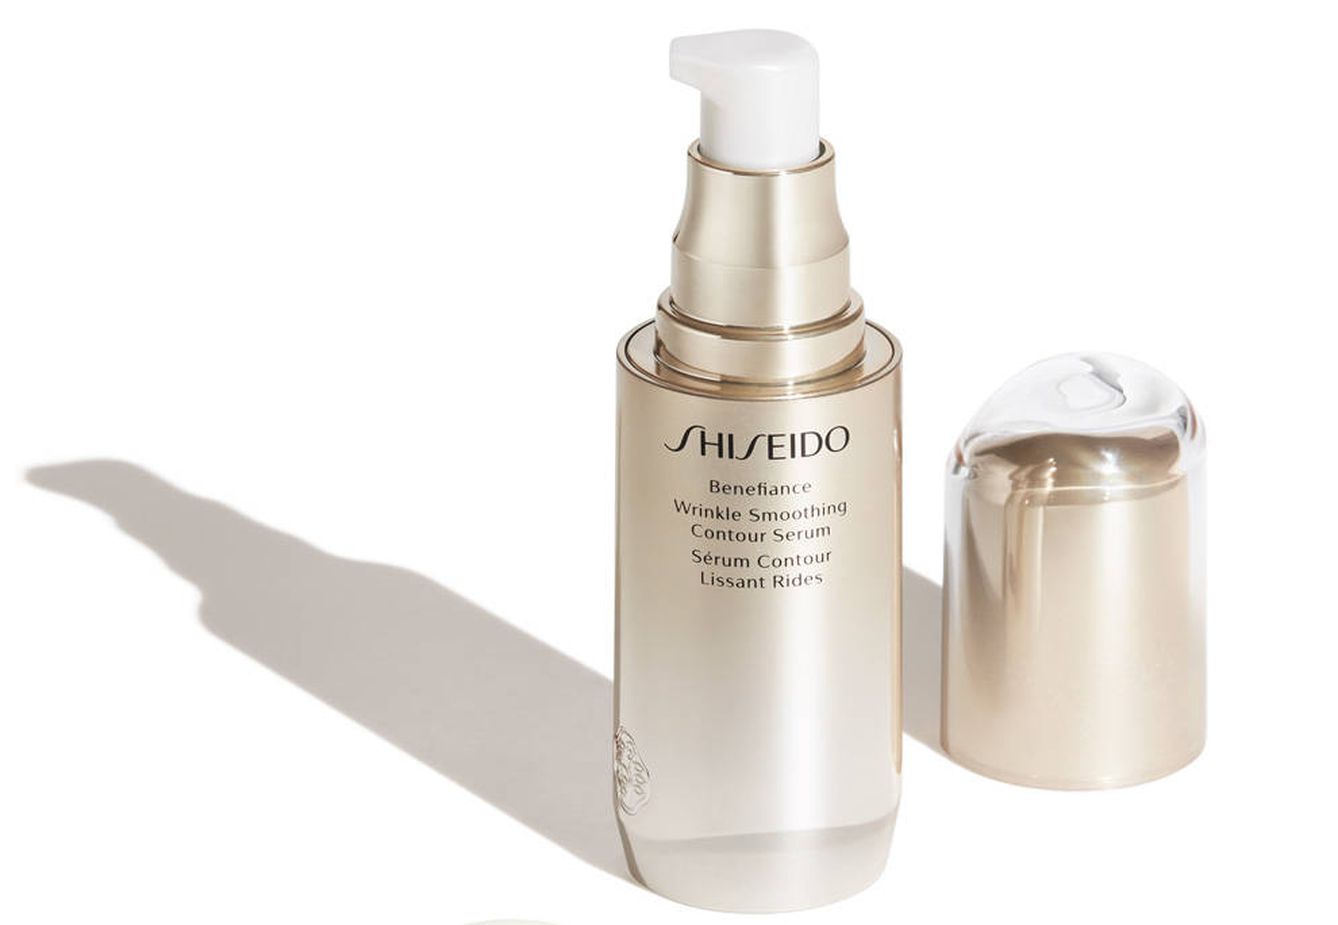 Benefiance Wrinkle Smoothing Contour Serum, de Shiseido (110€).